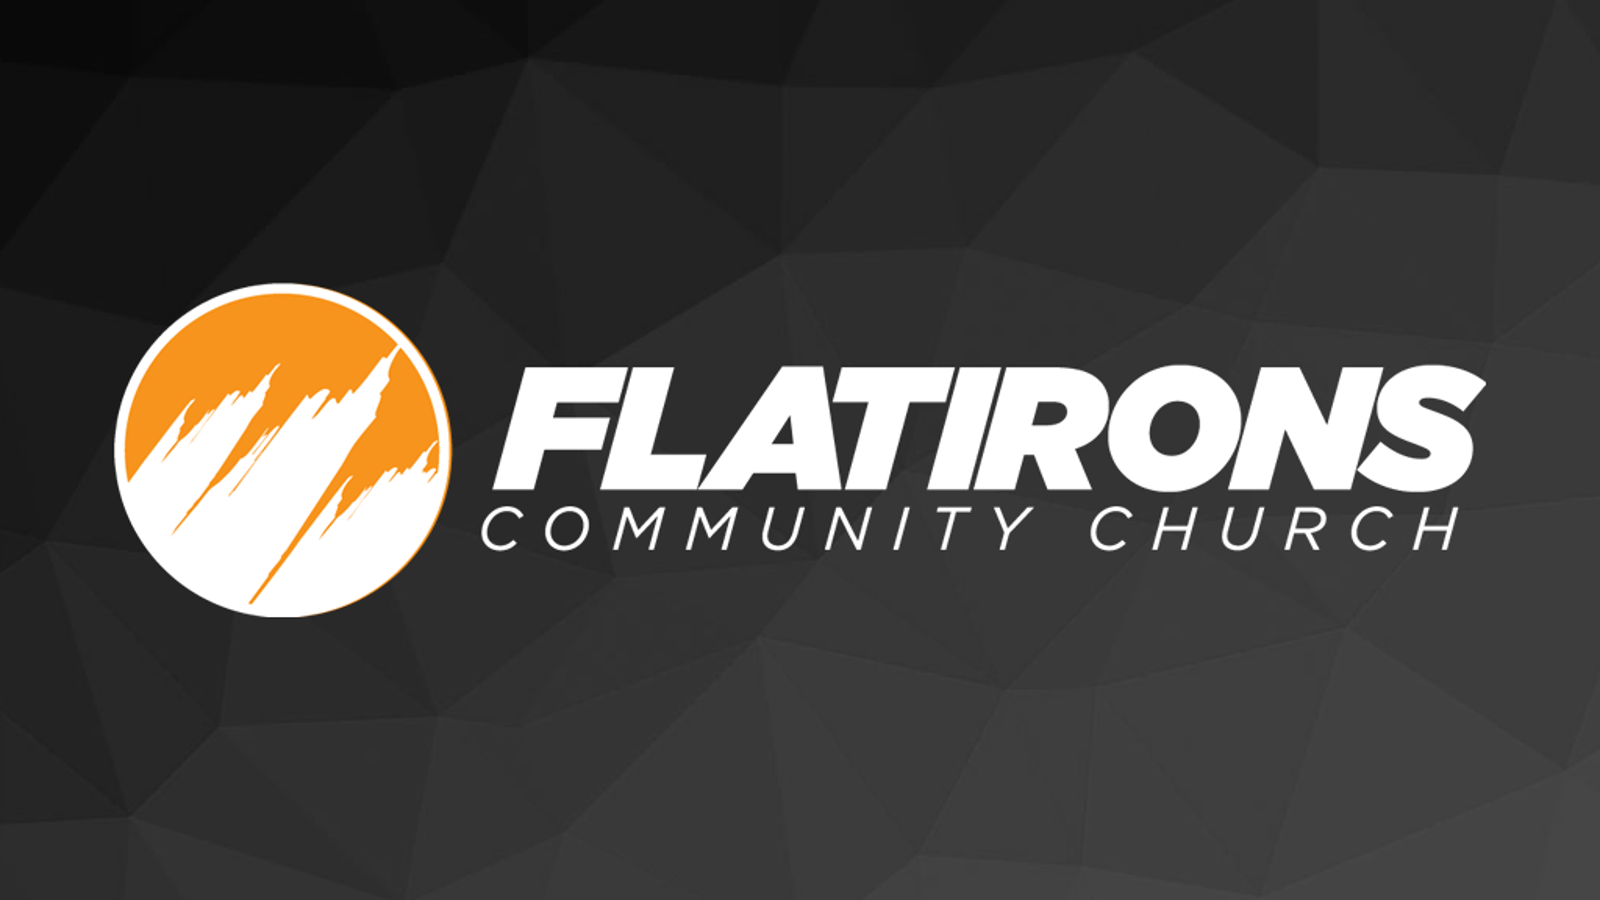 Flatirons Community Church